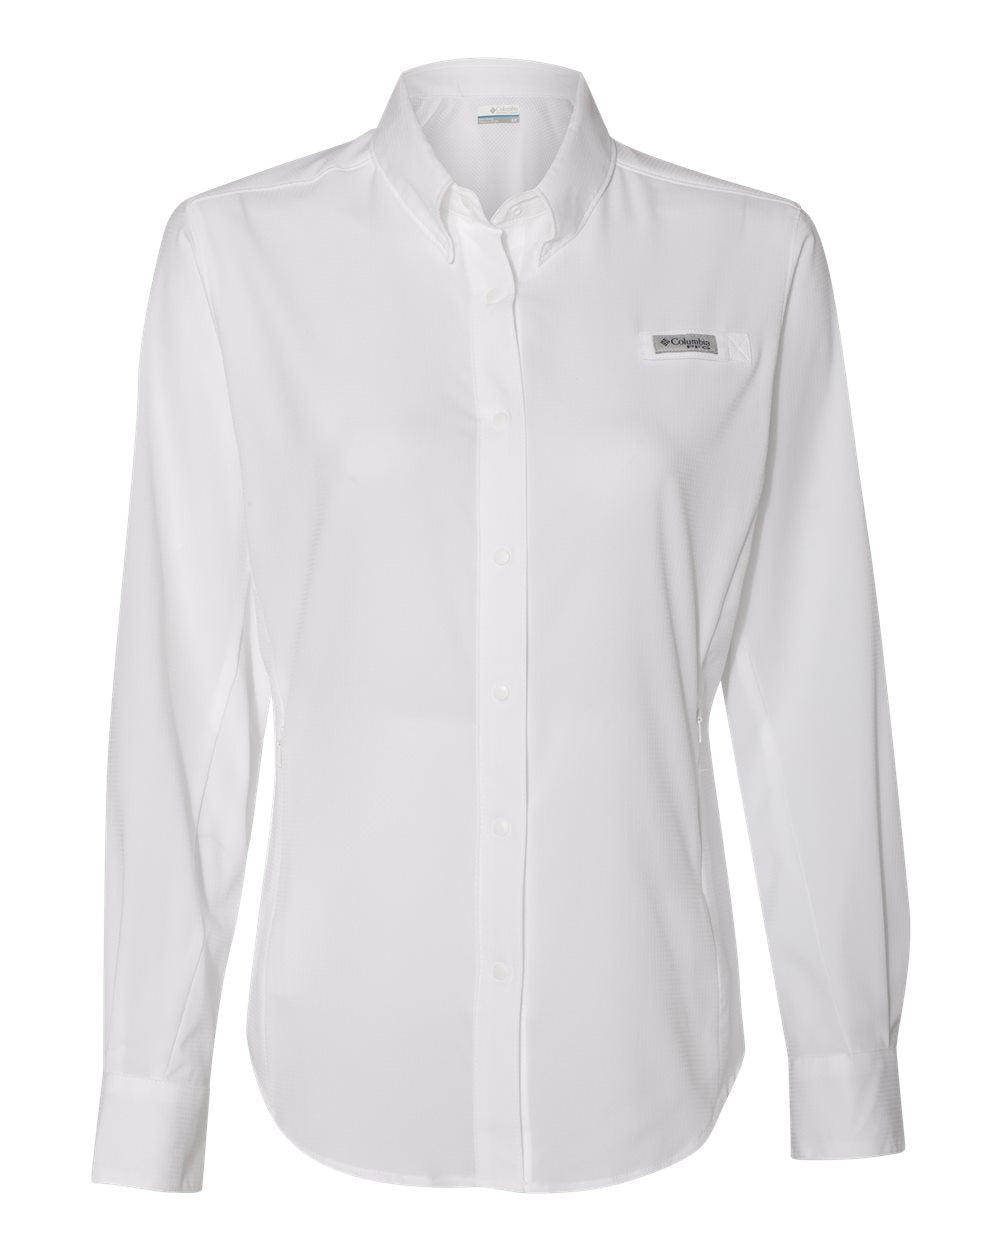 Columbia - Women's PFG Tamiami™ II Long Sleeve Shirt - 127570